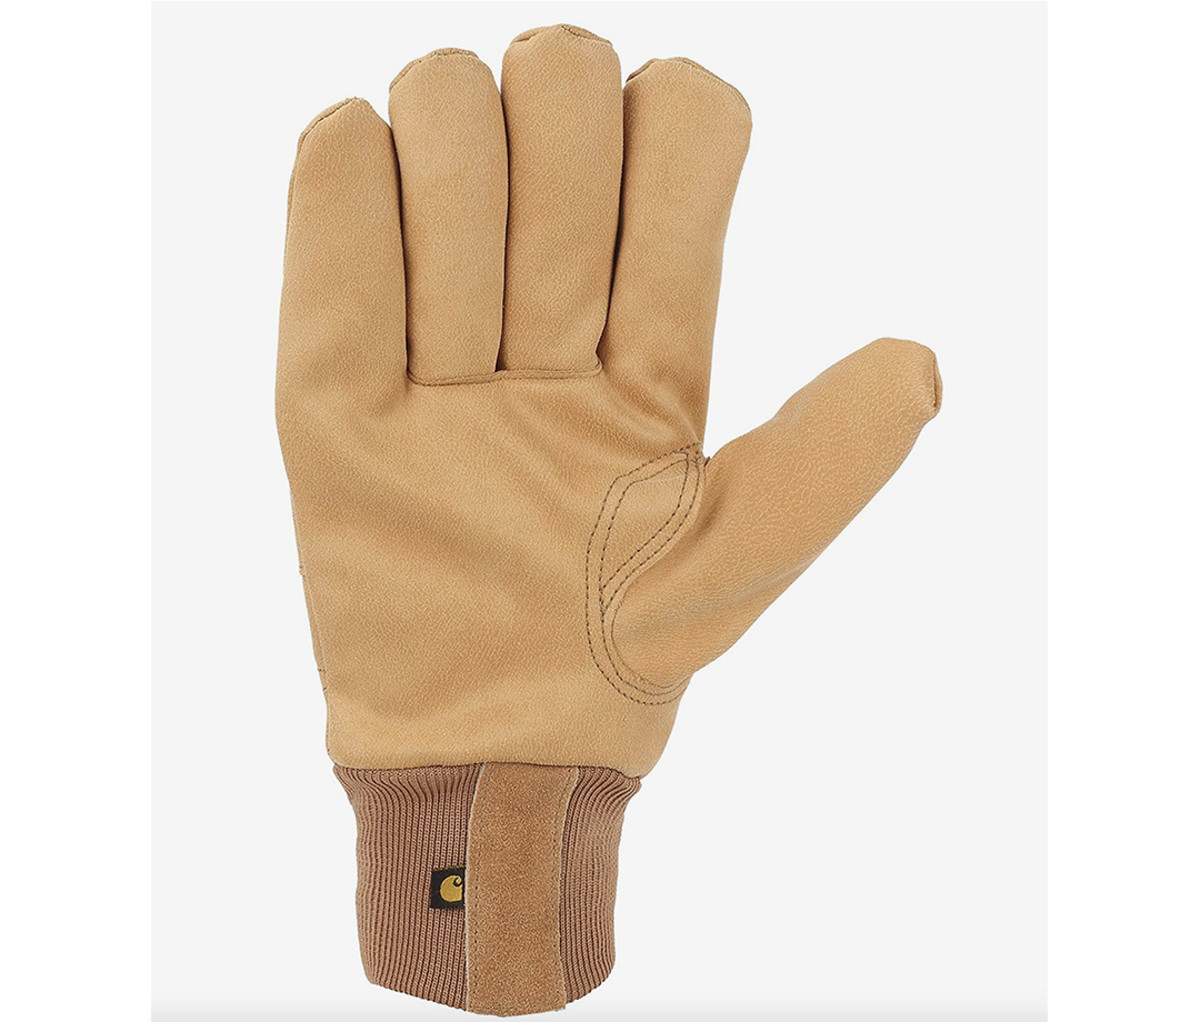 Carhartt Insulated System 5 Gunn Glove